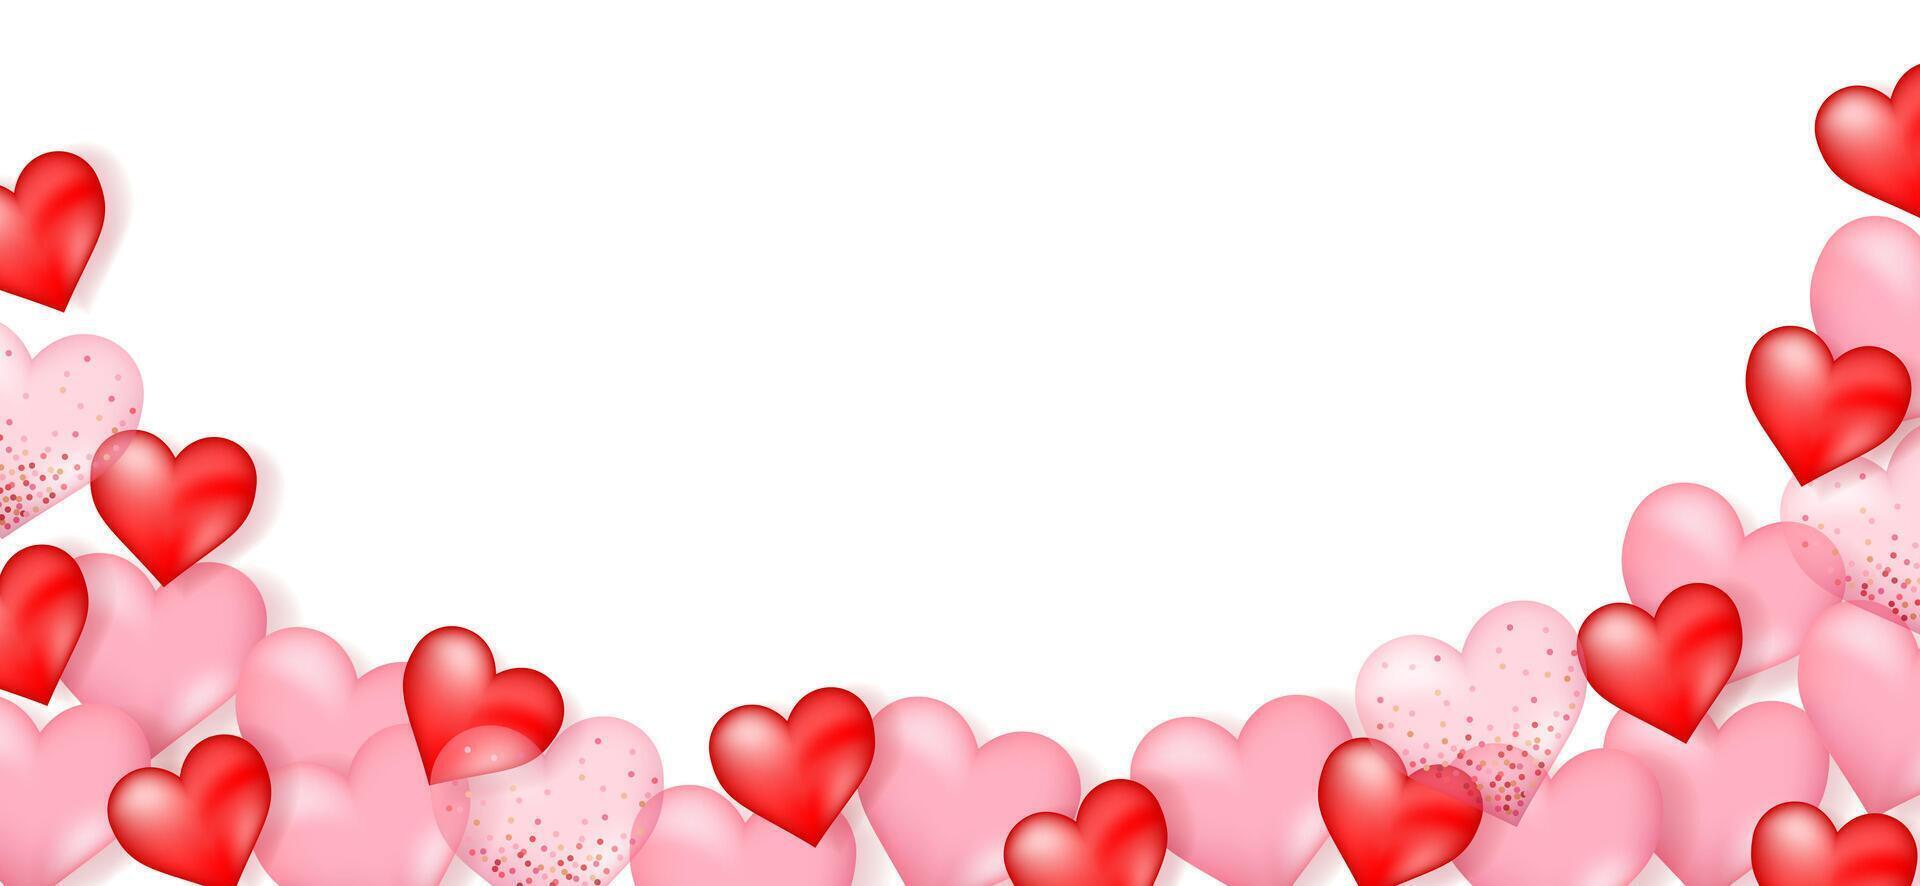 San Valentín día antecedentes. 3d corazones con sitio para texto. romántico rebaja pancartas plantillas, fondo o invitación tarjetas para boda. vector ilustración.